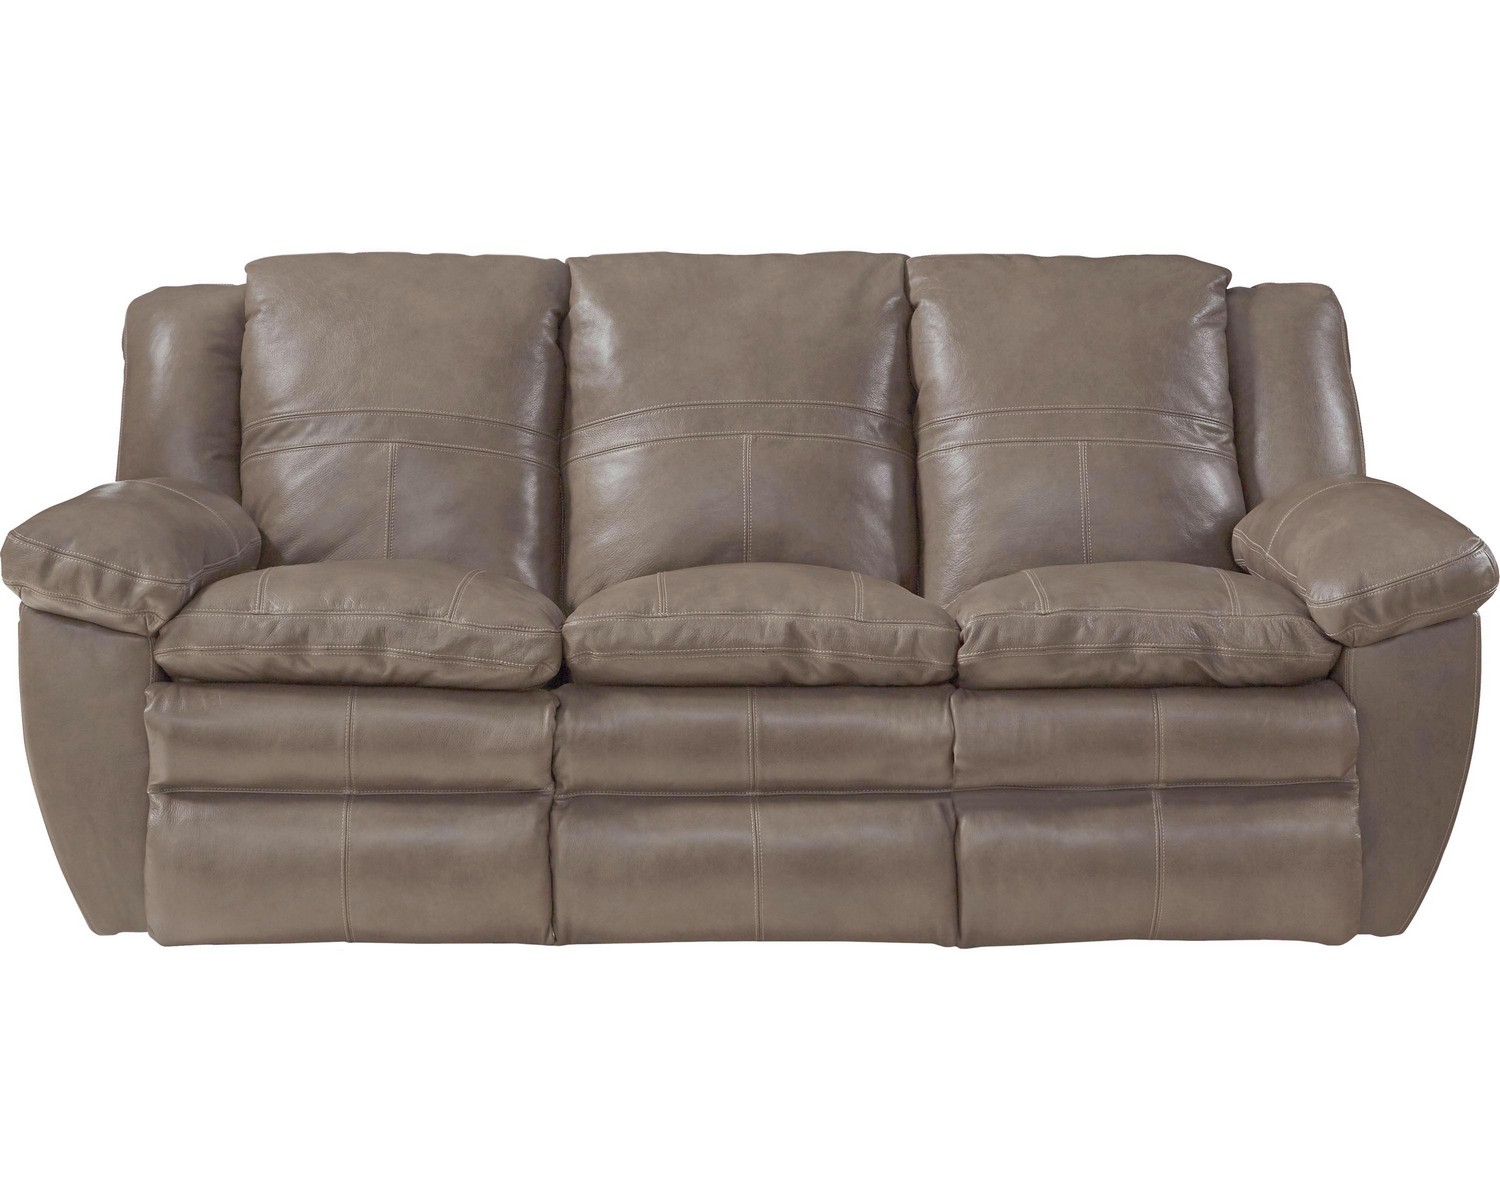 CatNapper Aria Top Grain Italian Leather Lay Flat Reclining Sofa - Smoke